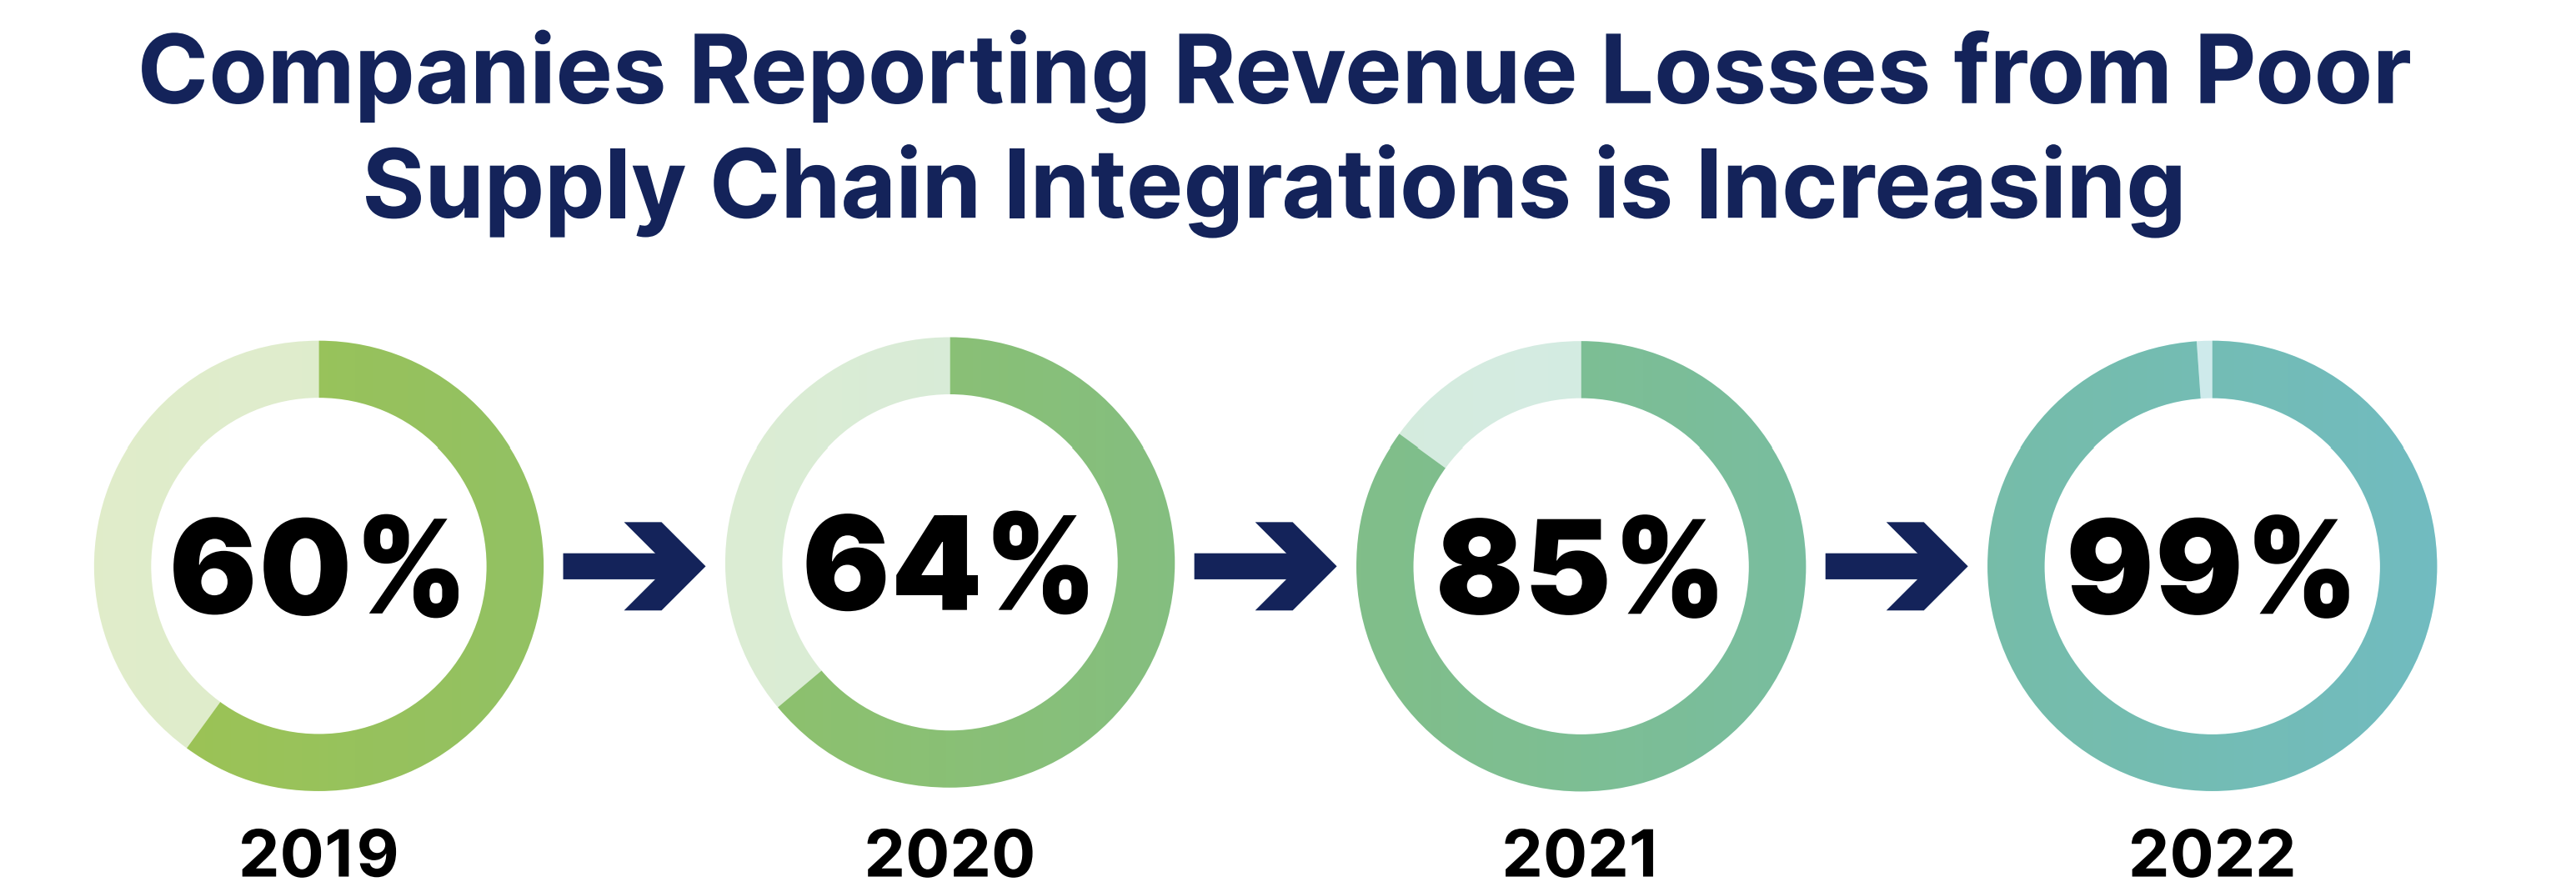 Supply Chain Integration Causing Revenue Loss